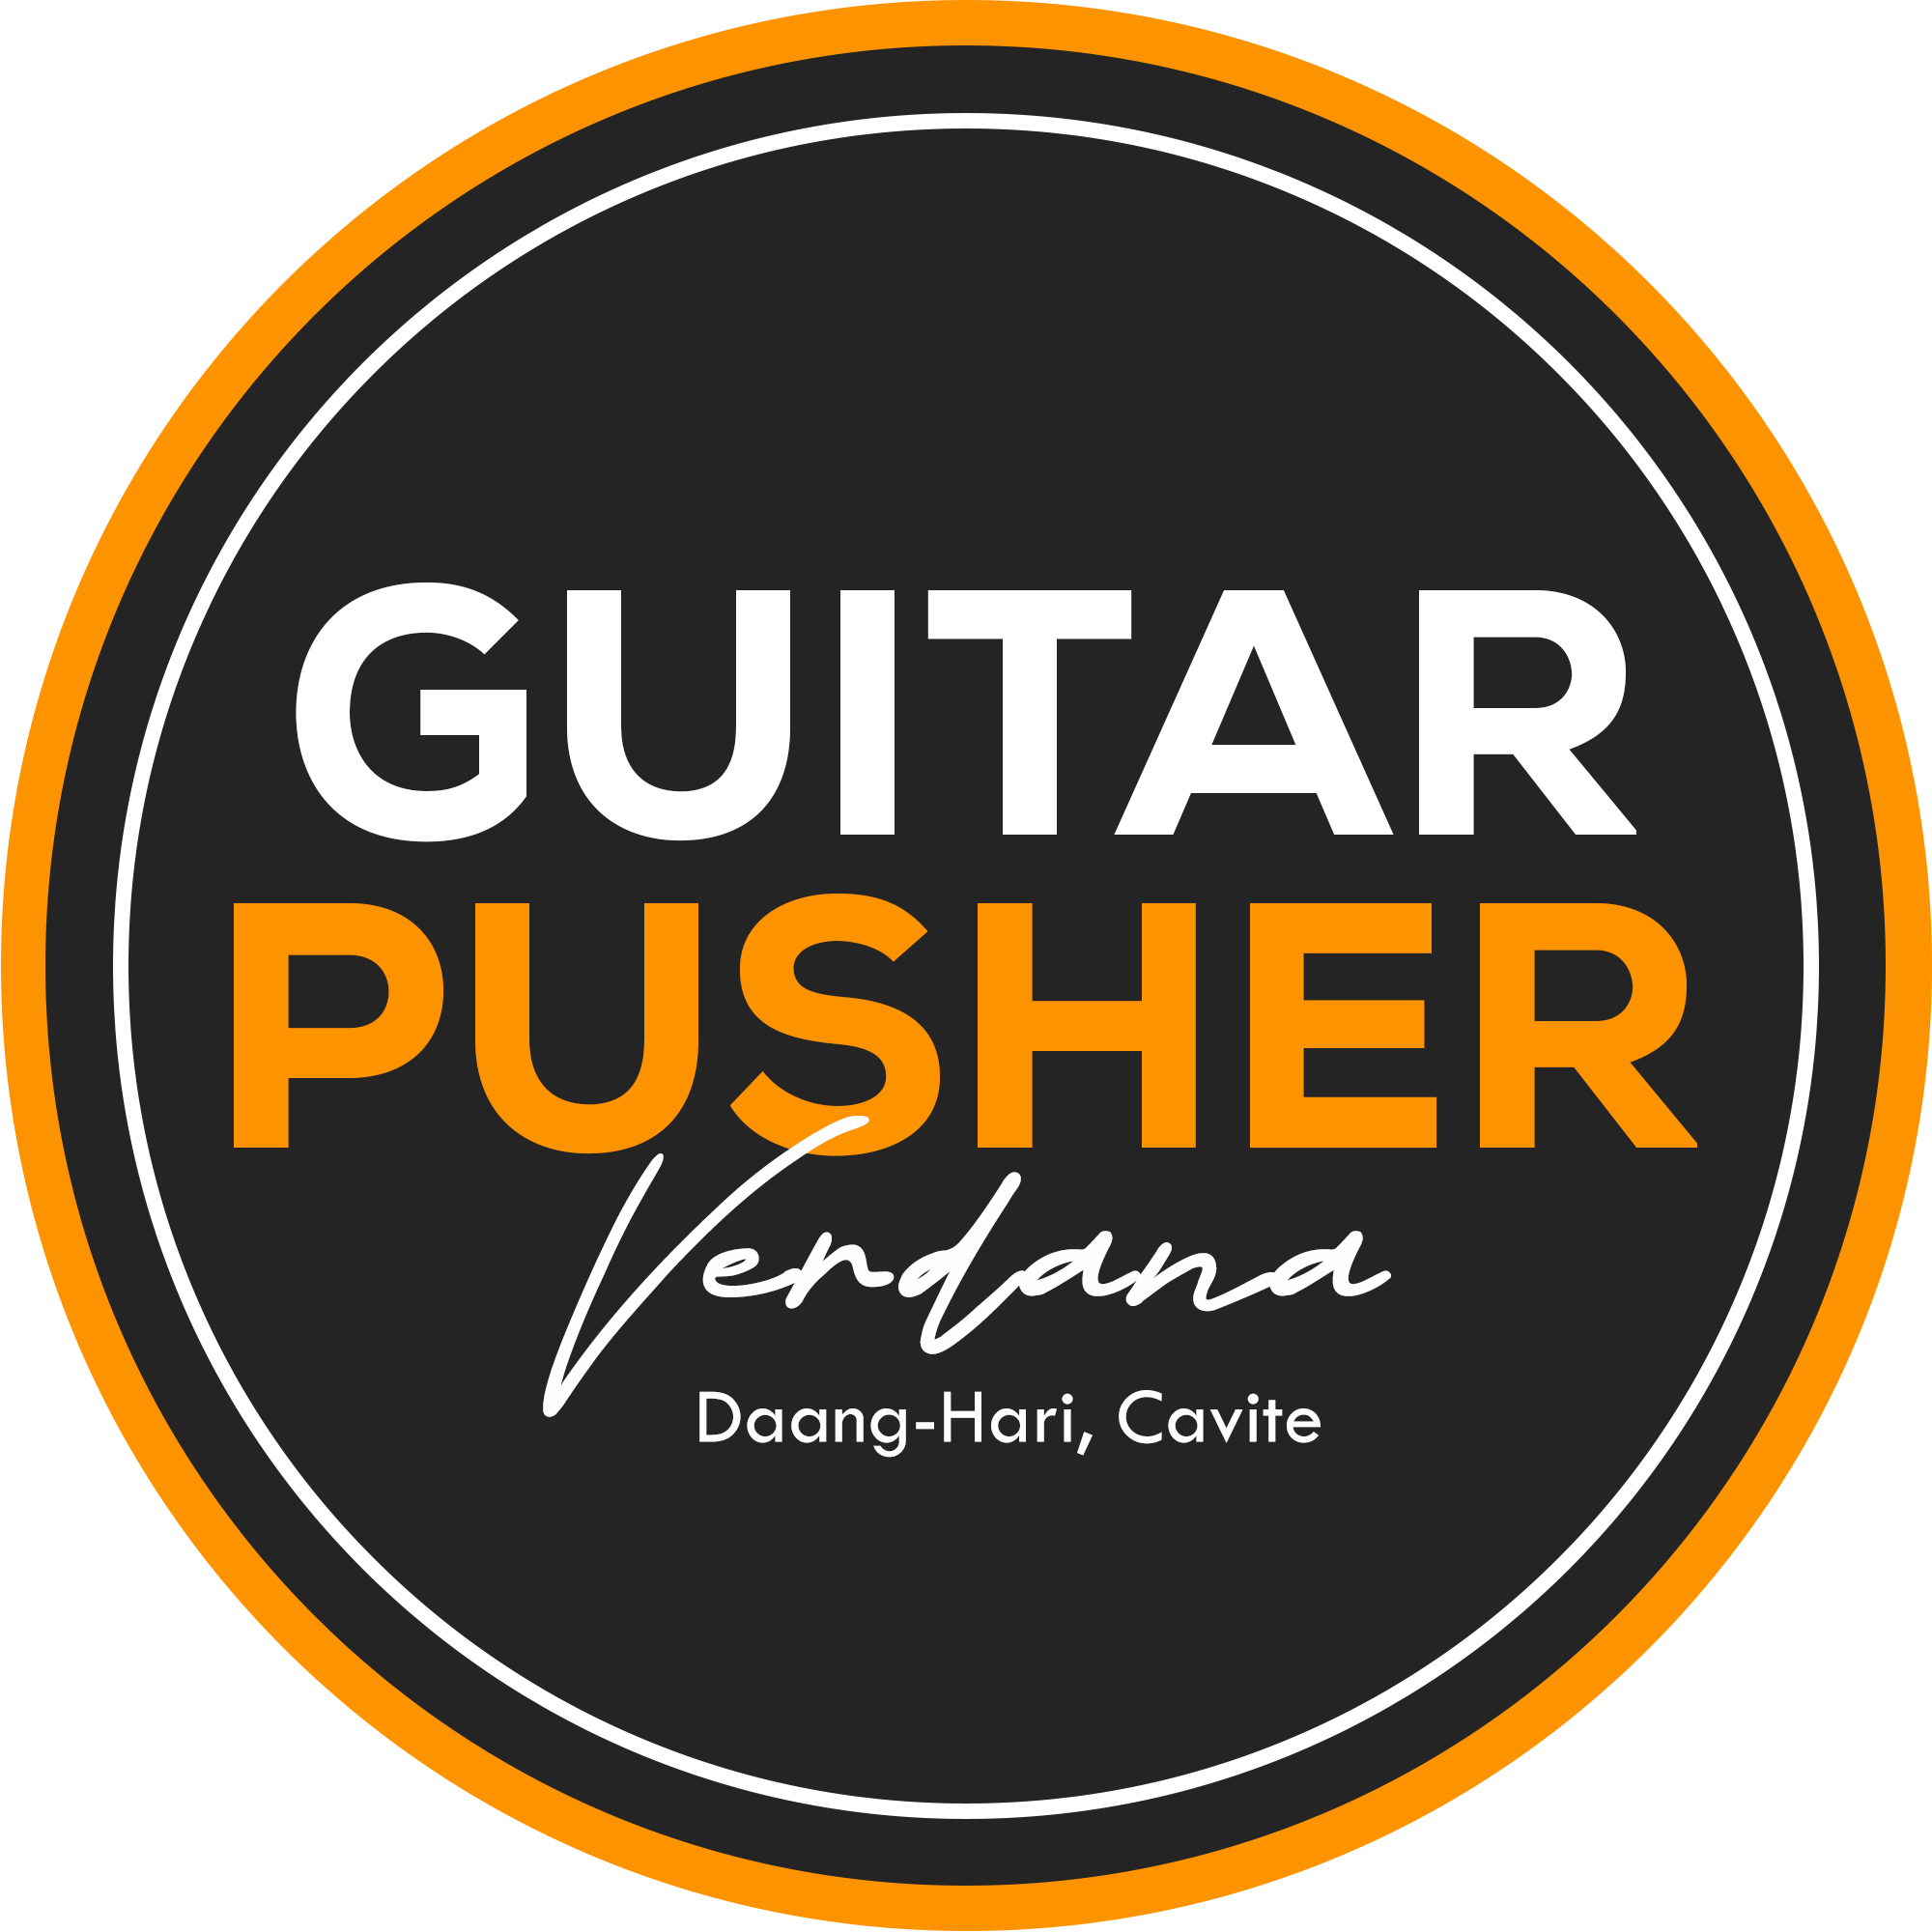 Guitar Pusher Verdana